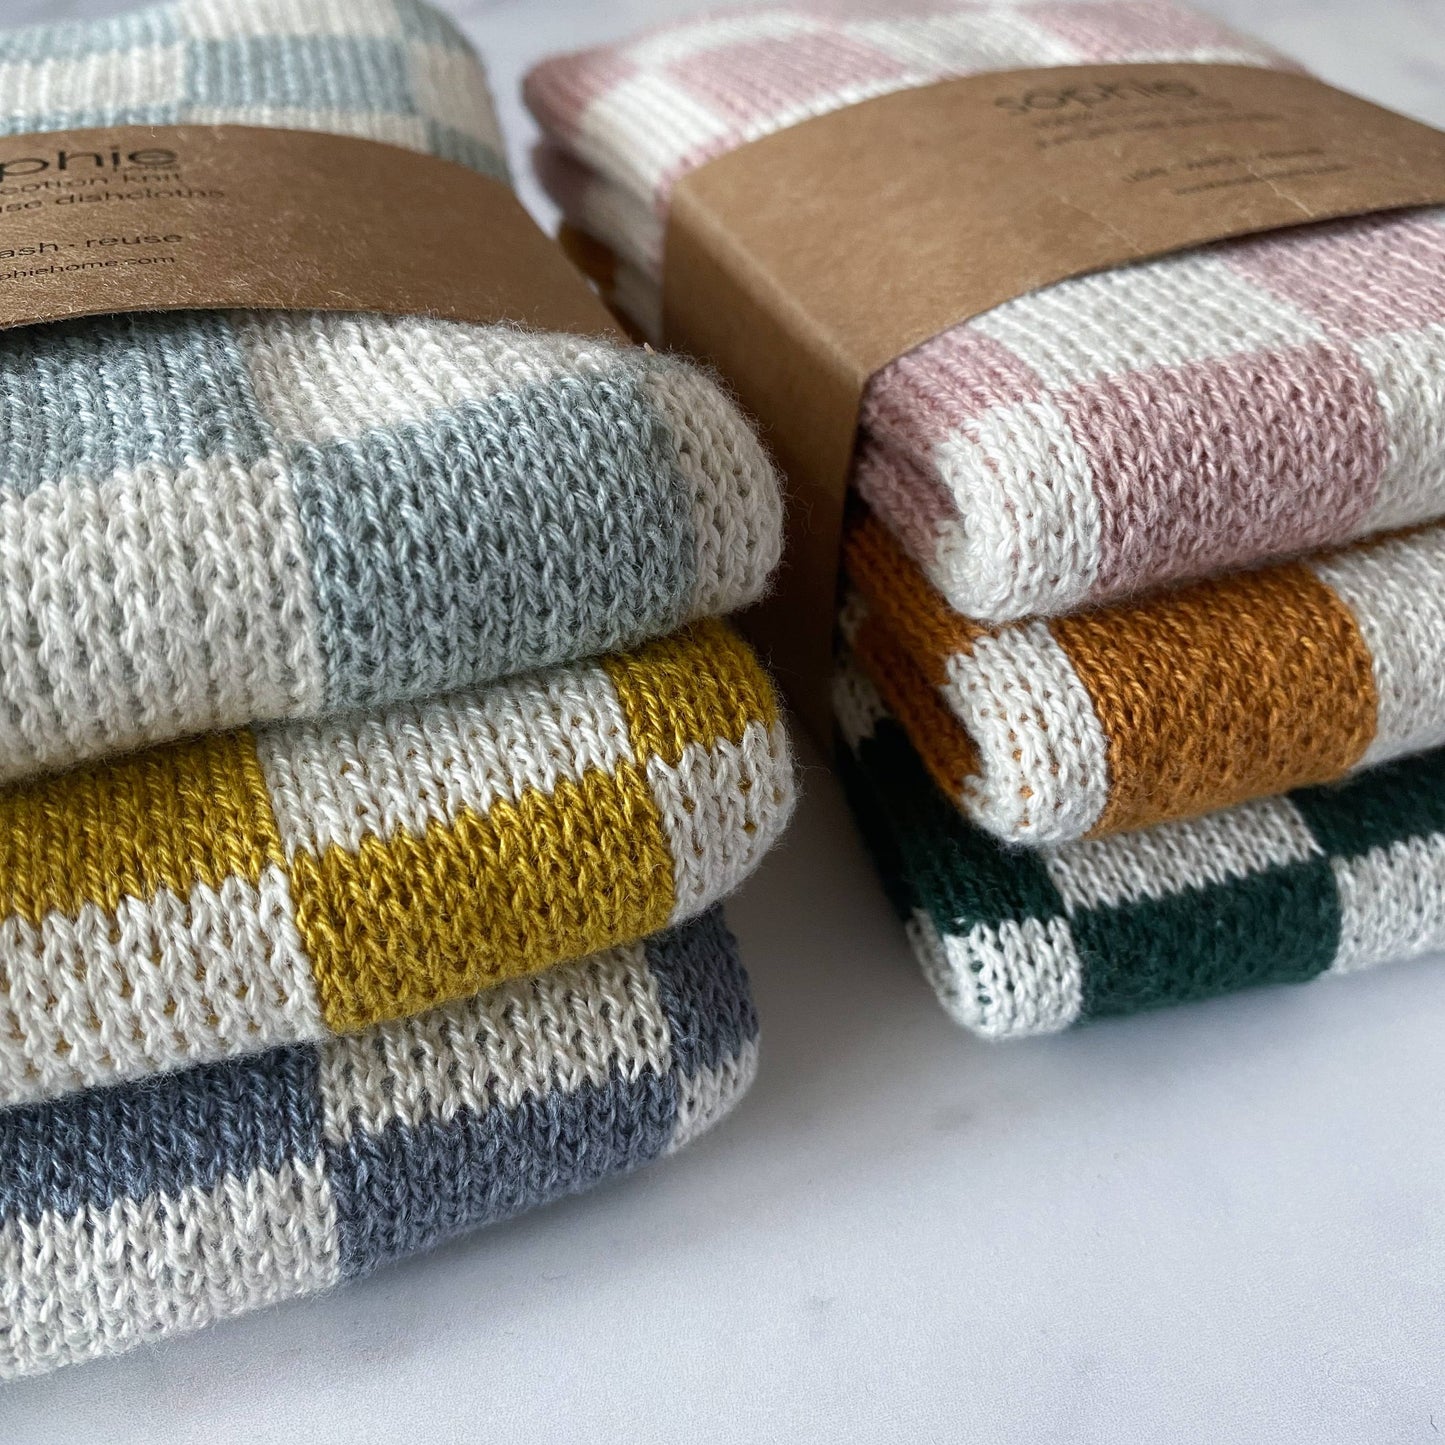 Sophie Home Ltd - Reusable & Eco-Friendly Cotton Knit Dishcloths - Pink Check